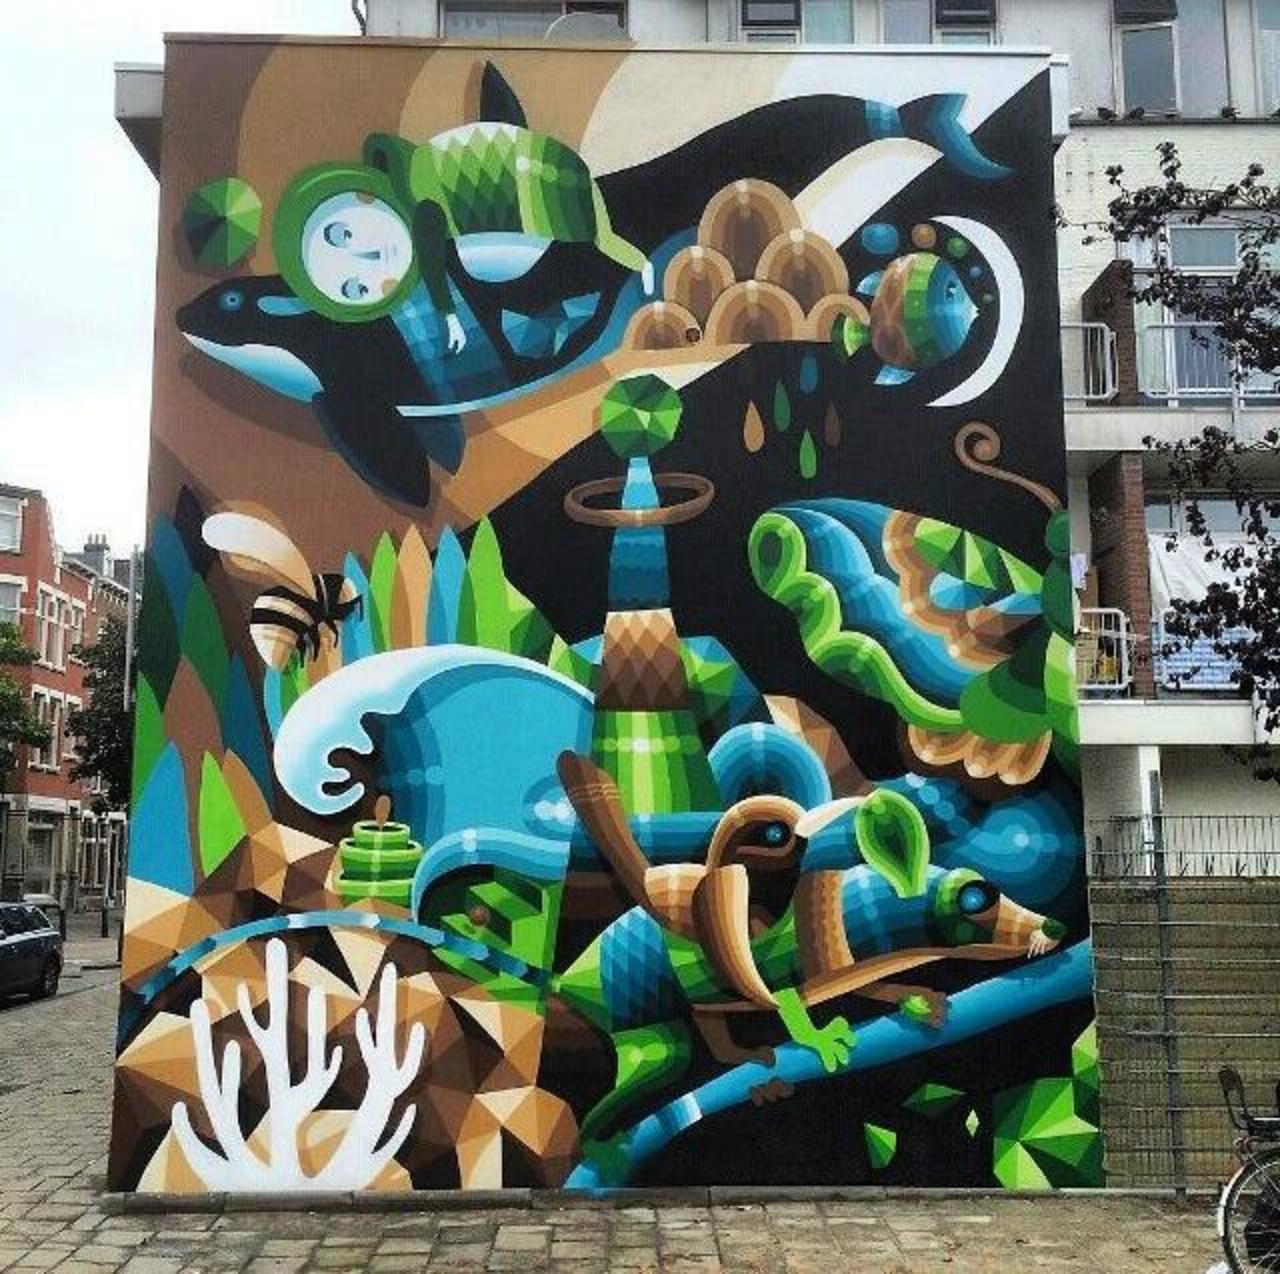 RT @010byday: "@HubStreetArt
Rotterdam #streetart #art https://t.co/OHZirZdYie #eelcovanderberg #virus #murual #wall #graffiti #artist"